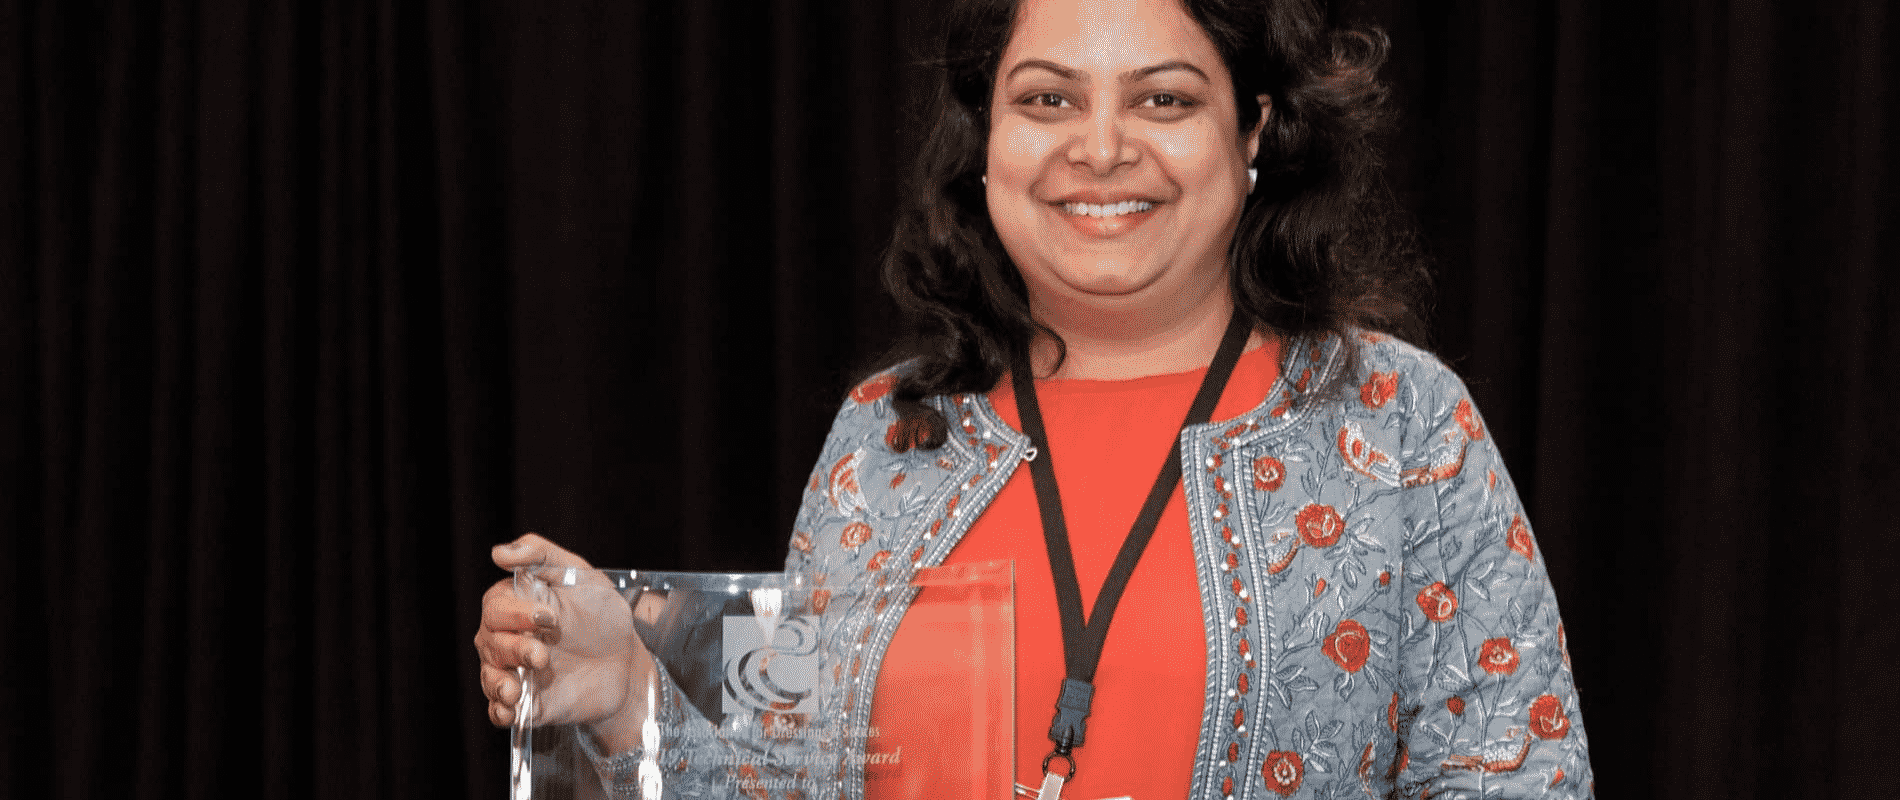 ADS Technical Service Award 2019 Dr.RituMishra